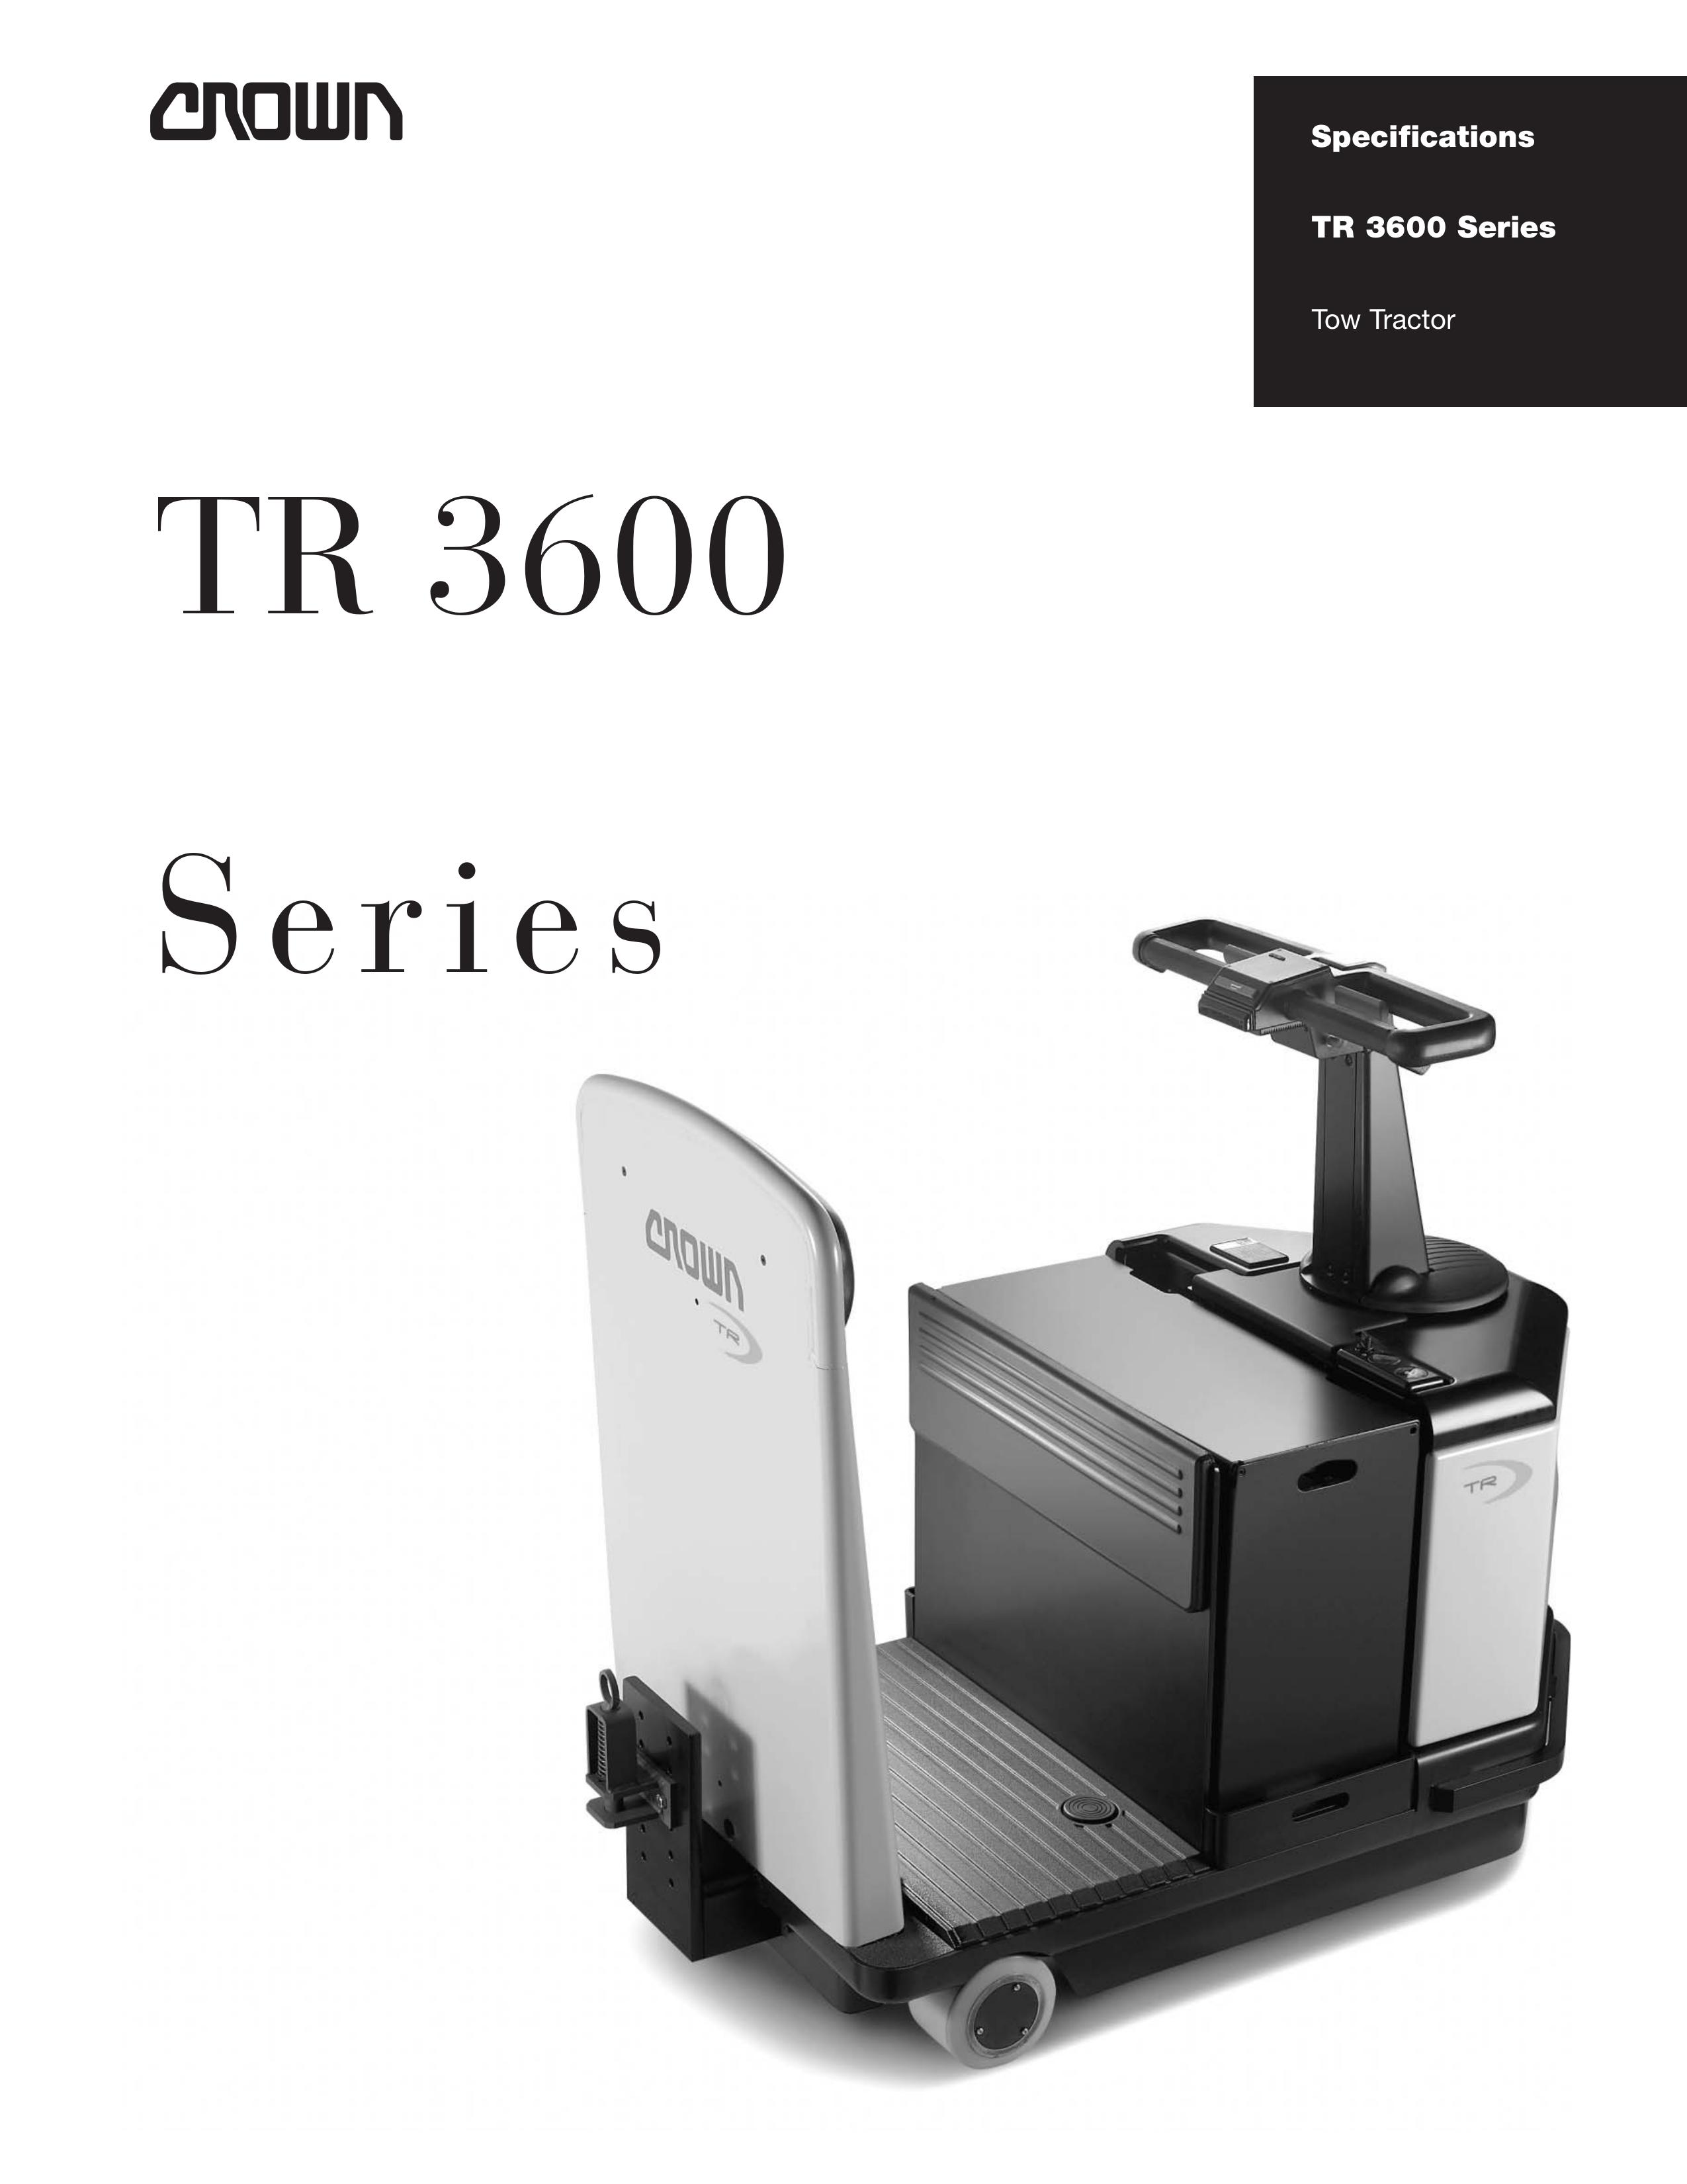 Crown Equipment TR 3600 Lawn Mower User Manual